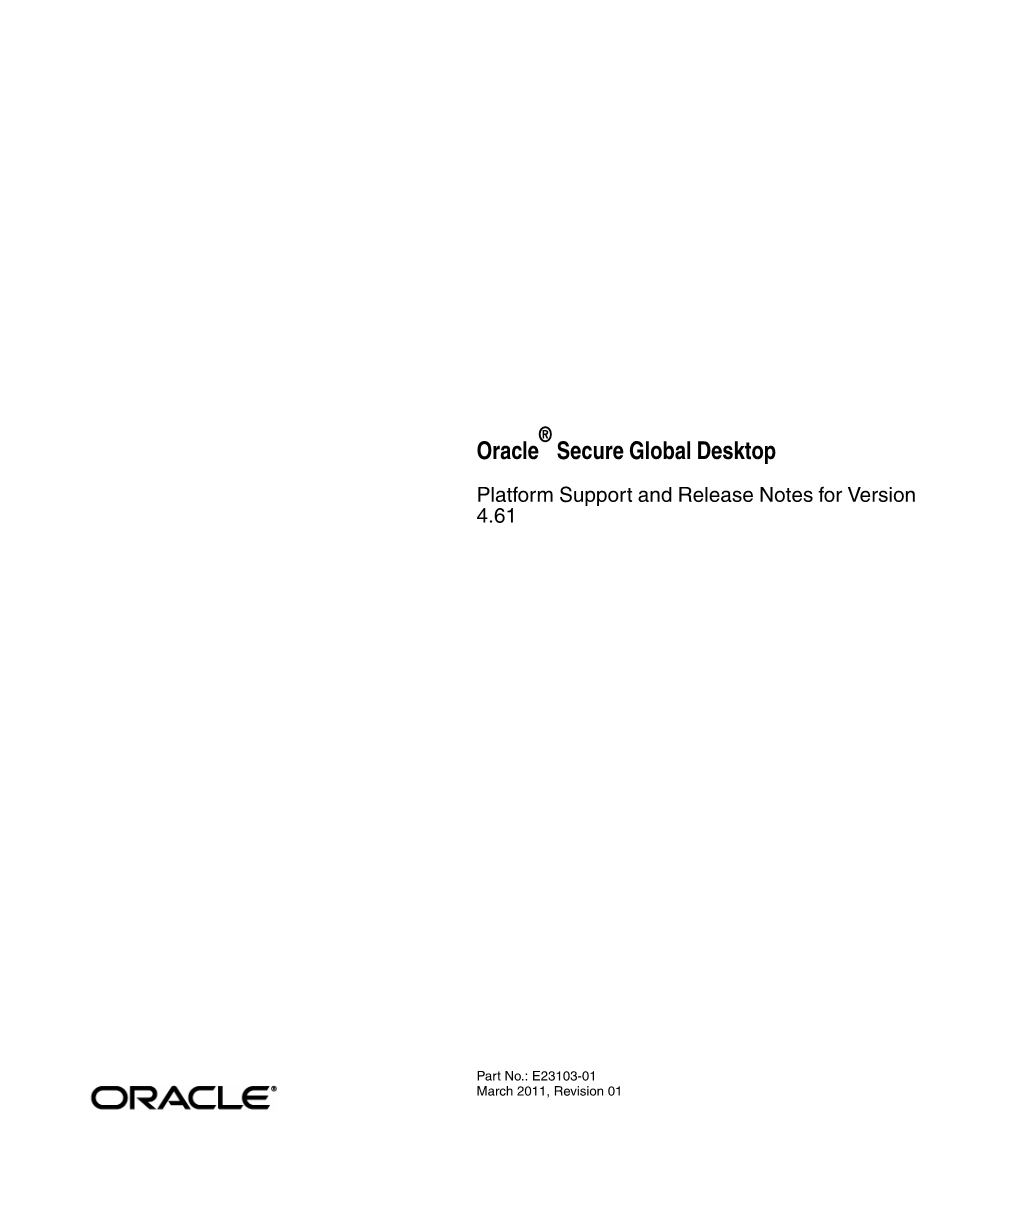 Oracle Secure Global Desktop 4.61 Platform Support and Release Notes